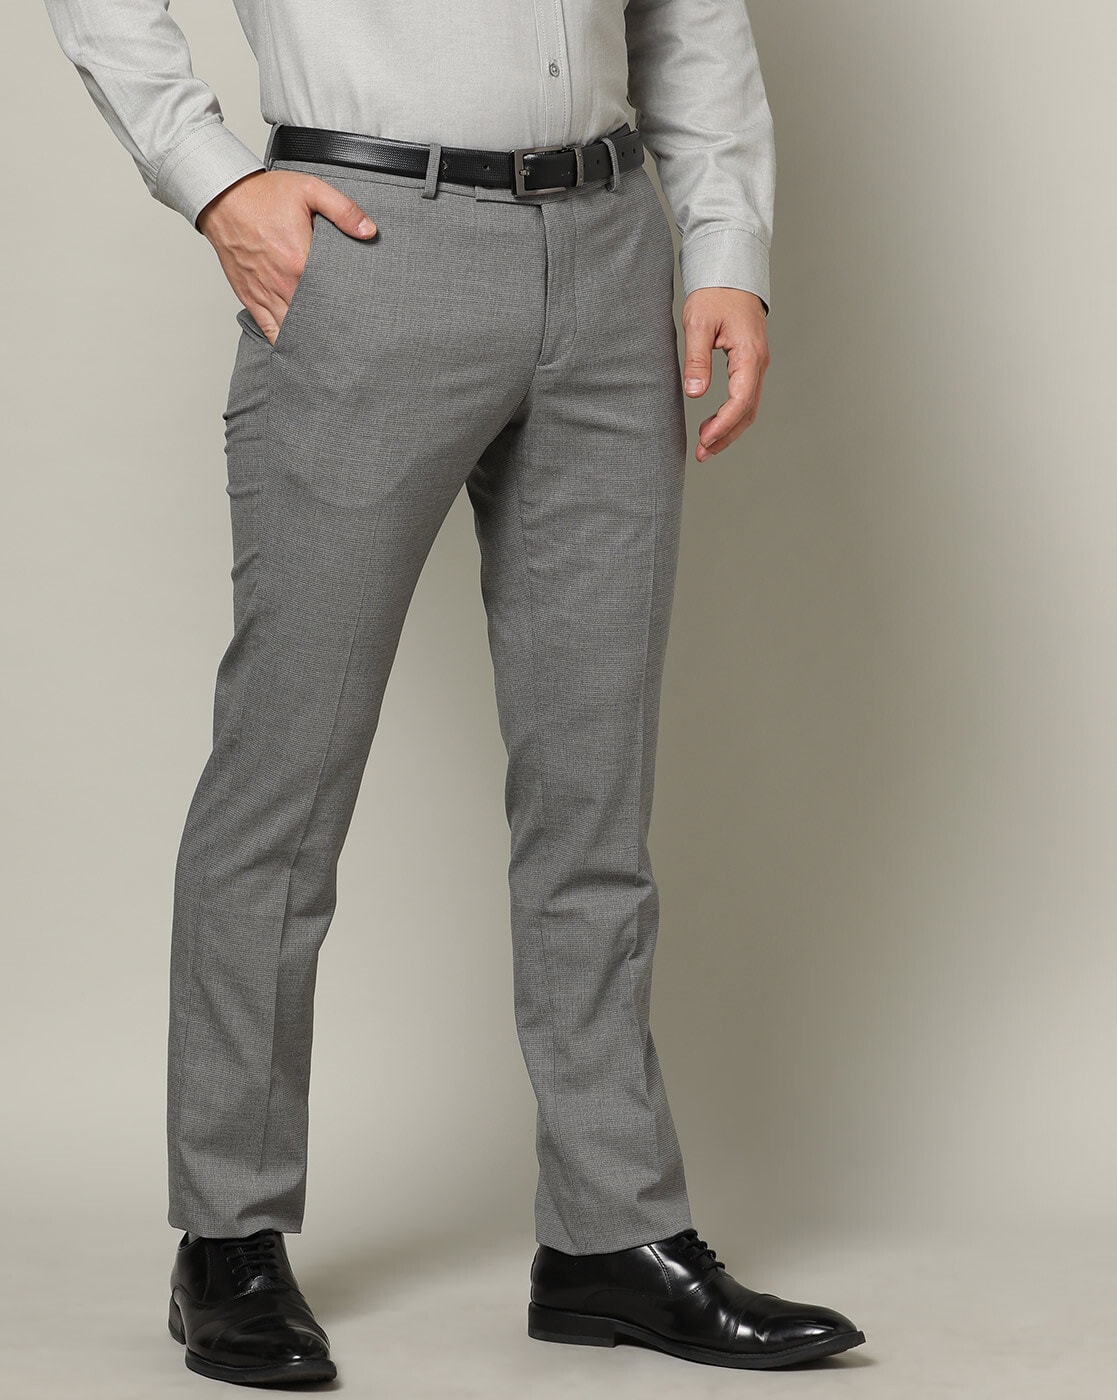 Cotton Men's Sports Arrow Pants Breathable and Soft Home Arrow Pants | eBay